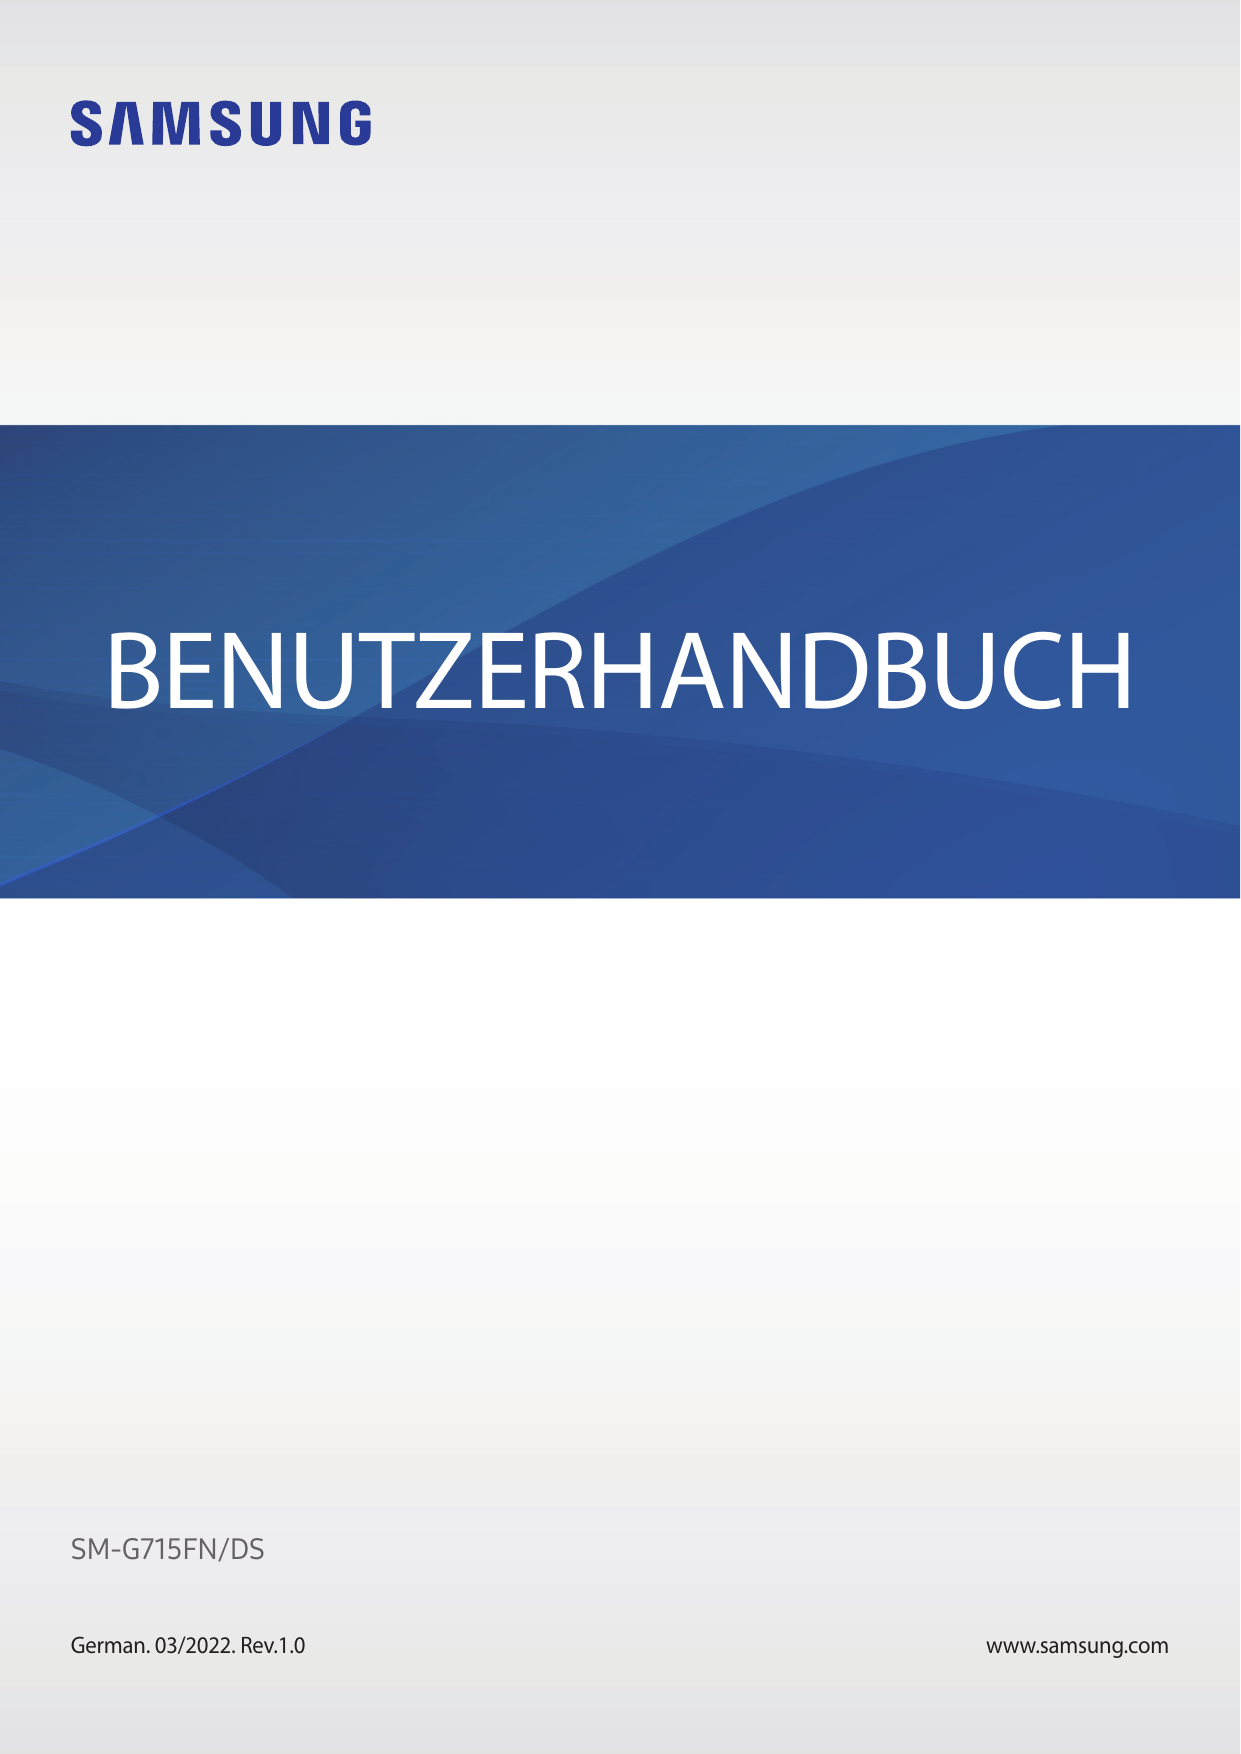 BENUTZERHANDBUCHSM-G715FN/DSGerman. 03/2022. Rev.1.0www.samsung.com